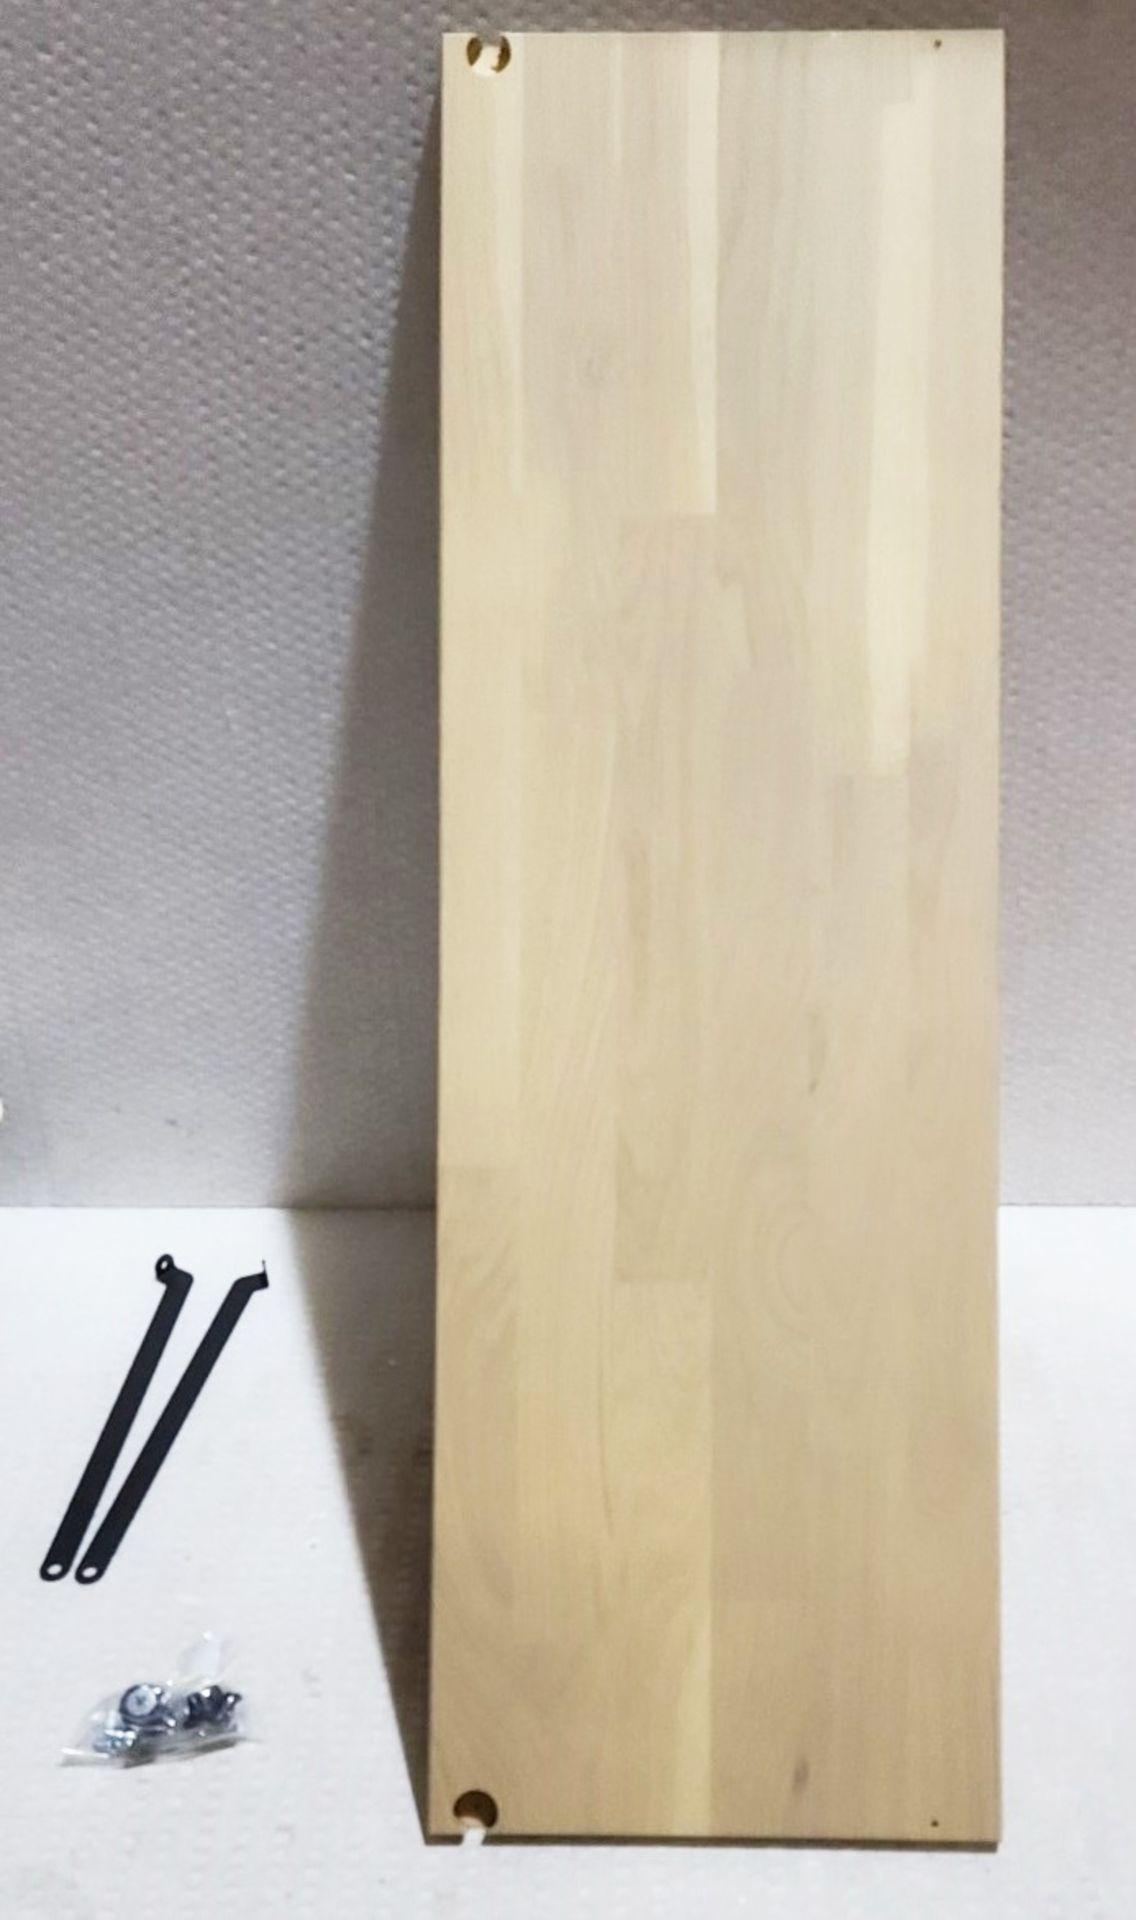 1 x WOOOD 'Gyan Legplank' Light Oak Shelf With Black Metal Braces 80cm - Image 5 of 7